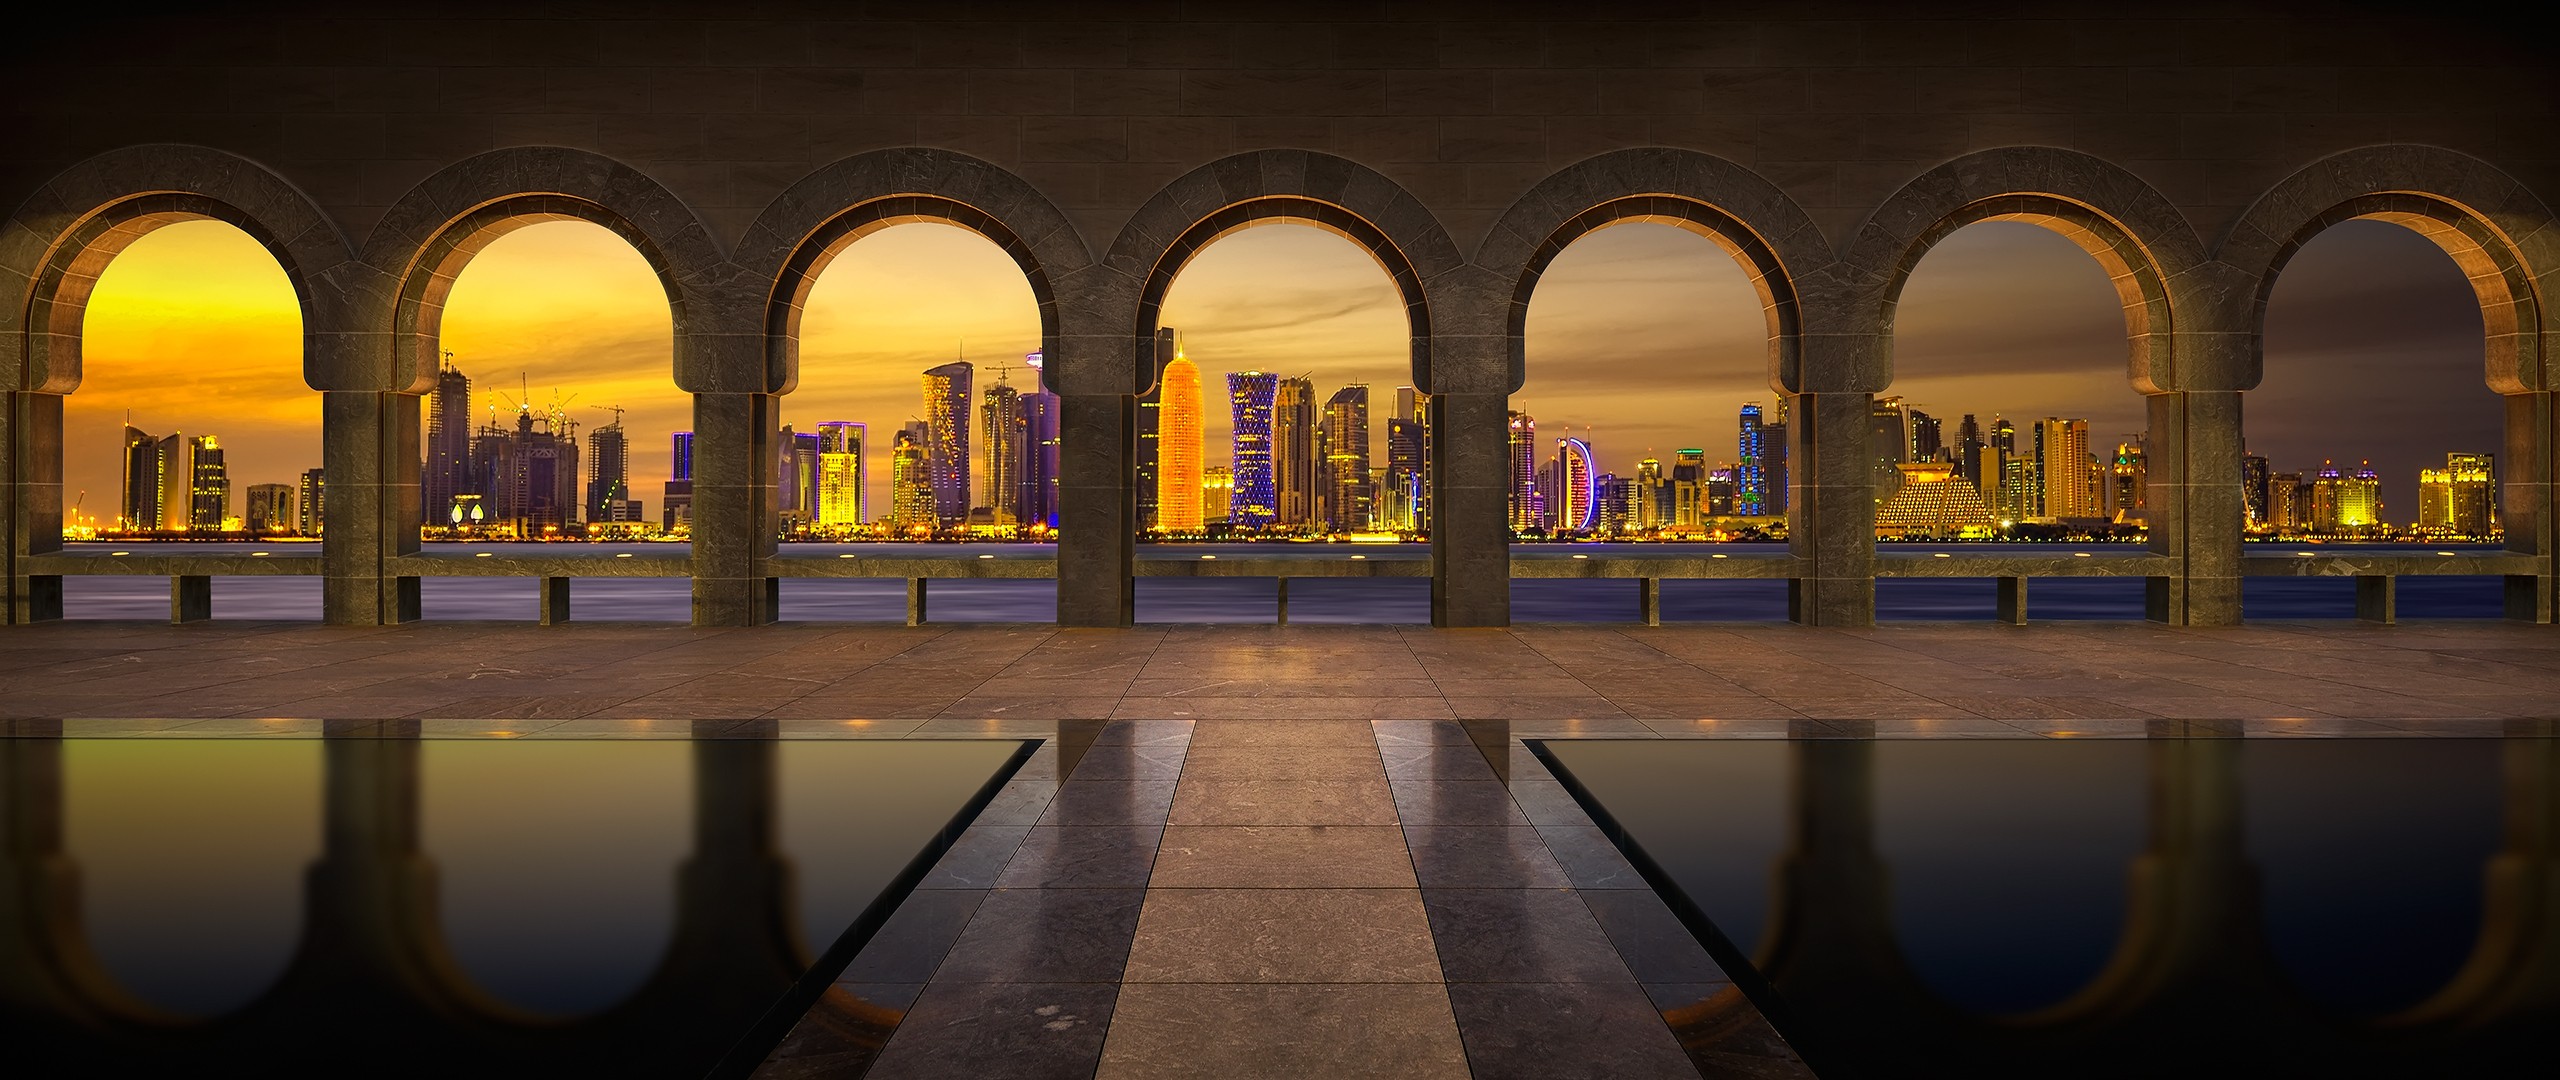 General 2560x1080 Qatar Doha city stone arch city lights reflection cityscape